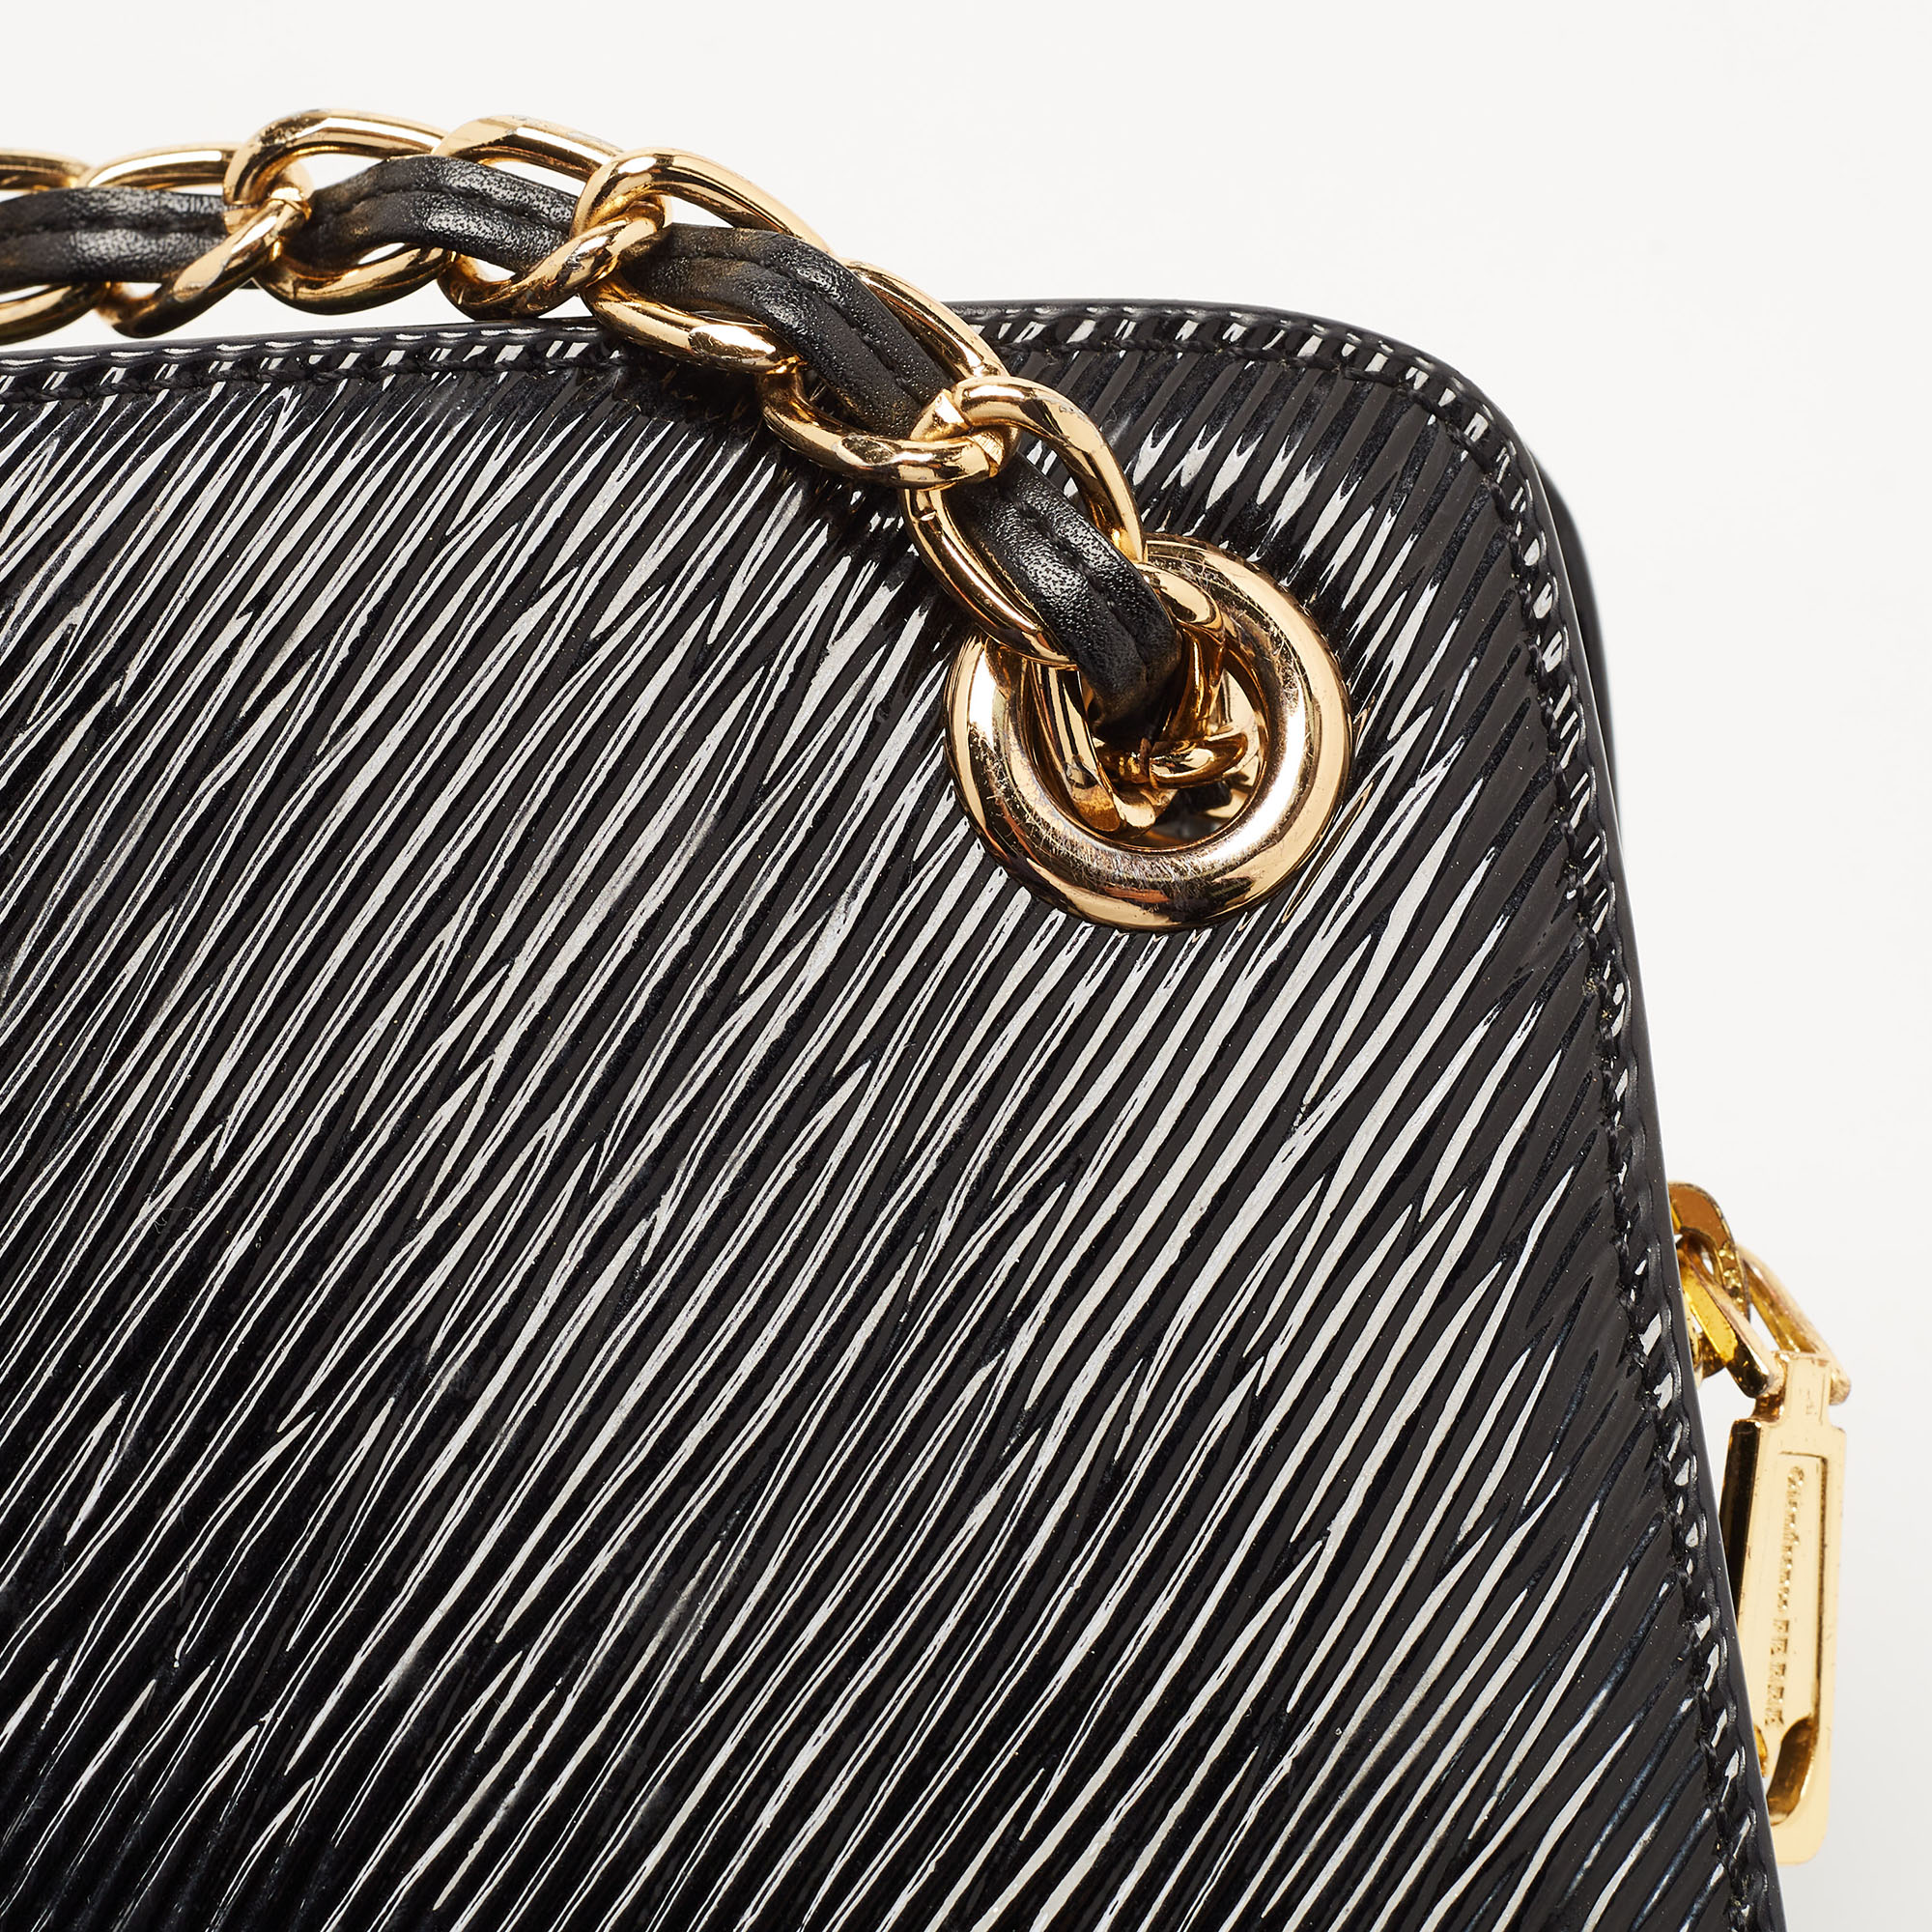 Gianfranco Ferre Black Patent Leather Chain Shoulder Bag